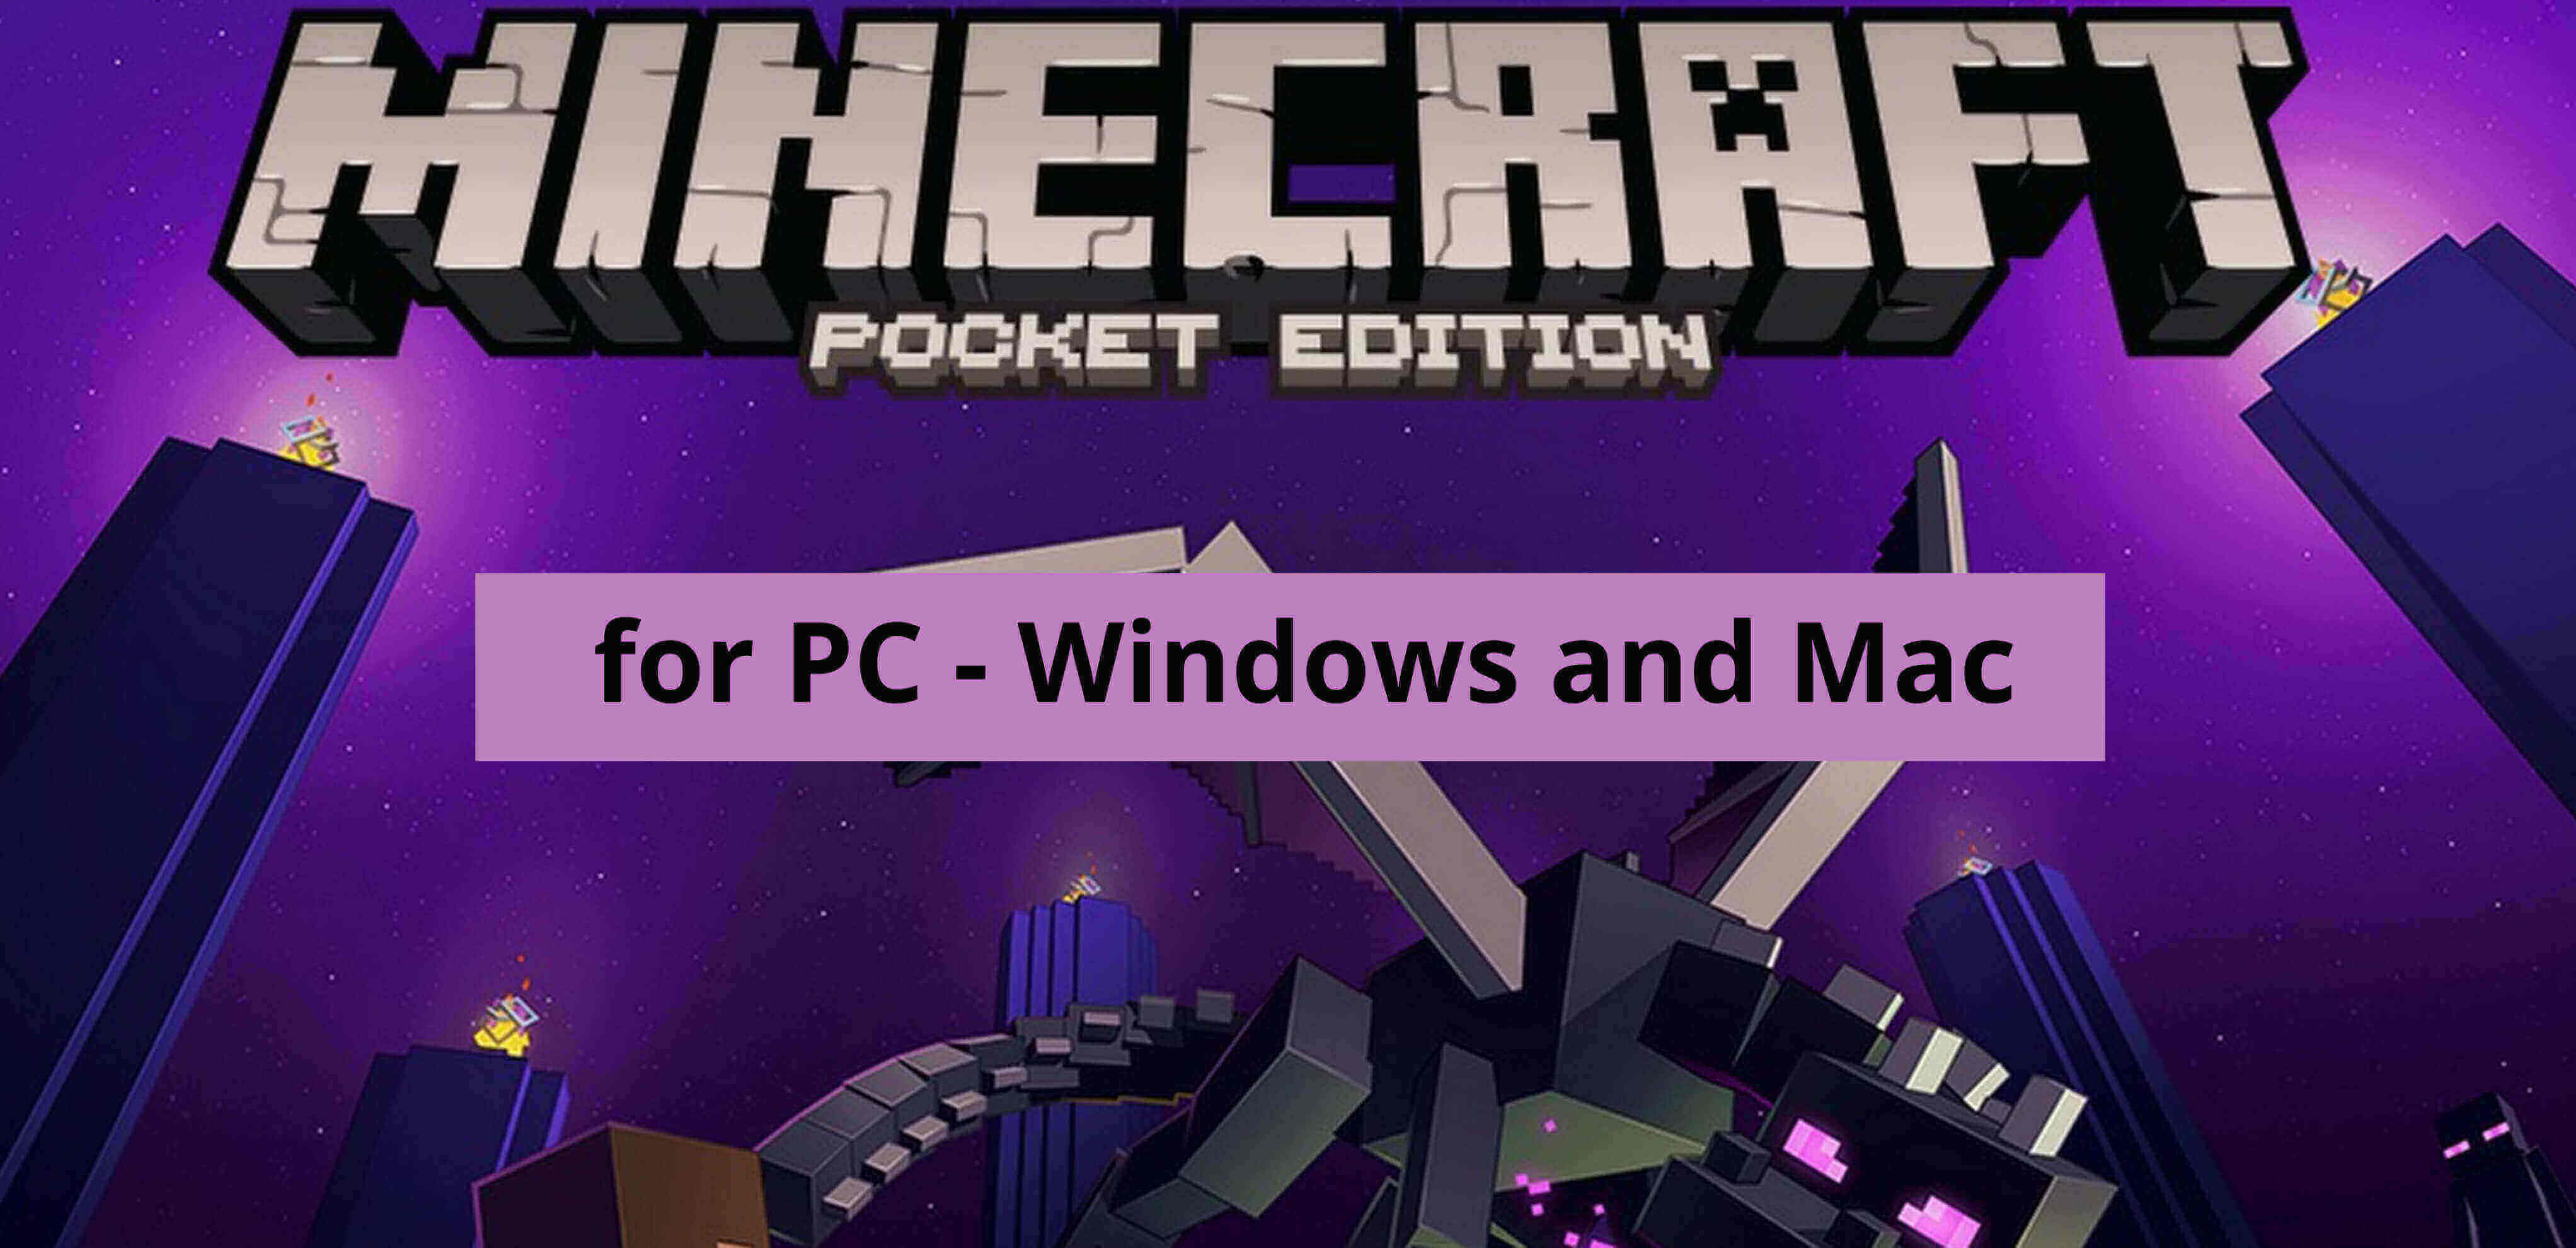 minecraft 1.14 mojang free download full version